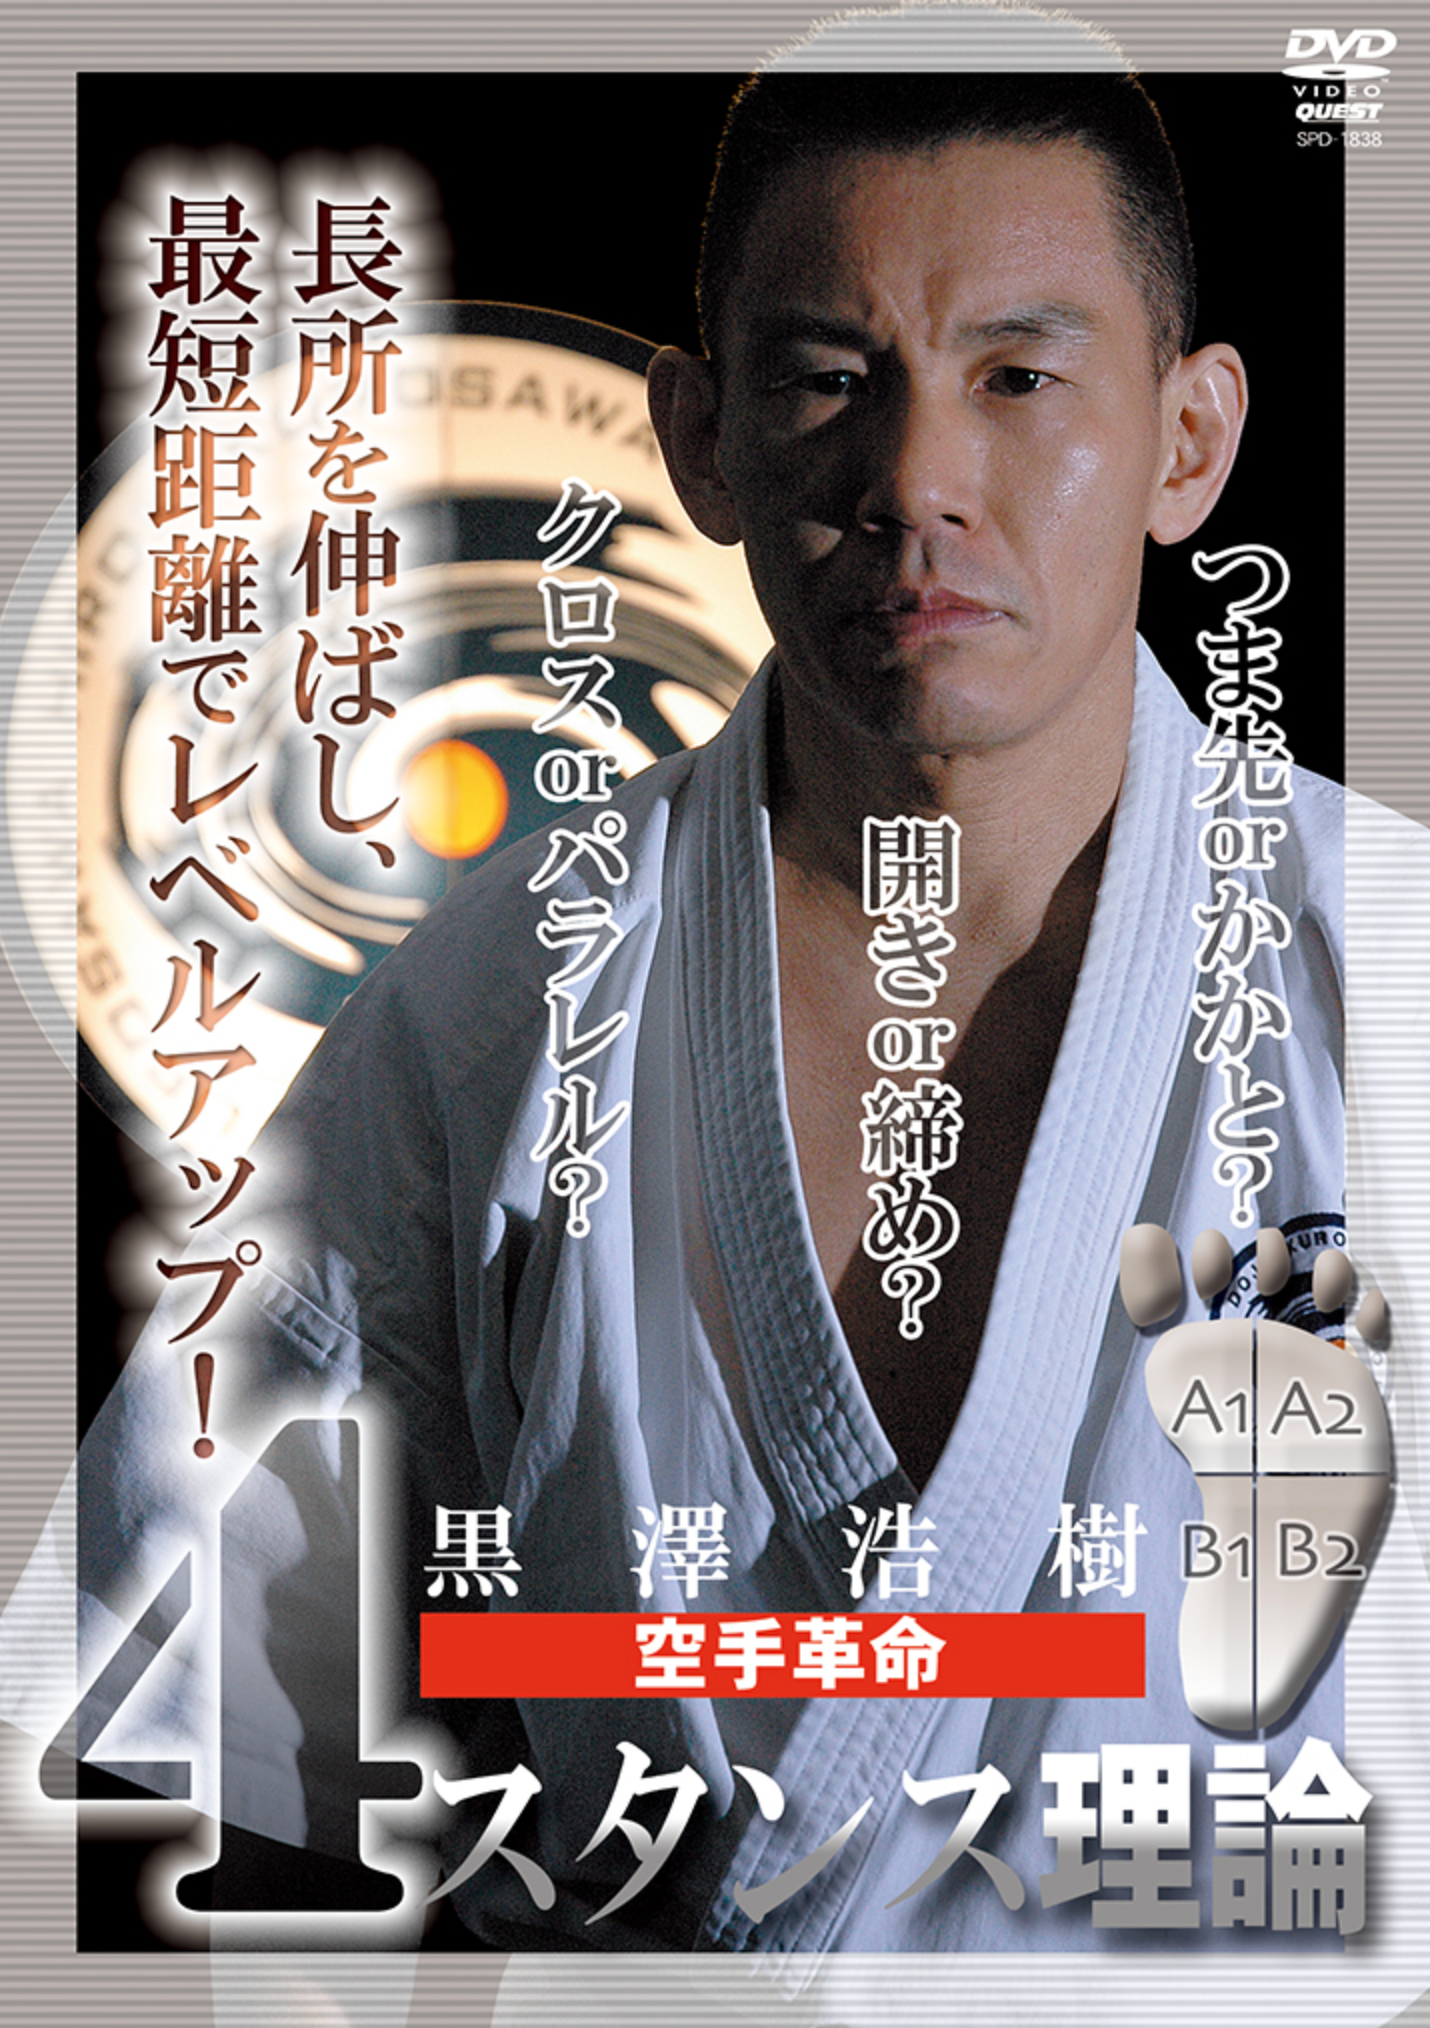 The 4 Stances of Karate DVD by Hiroki Kurosawa - Budovideos Inc